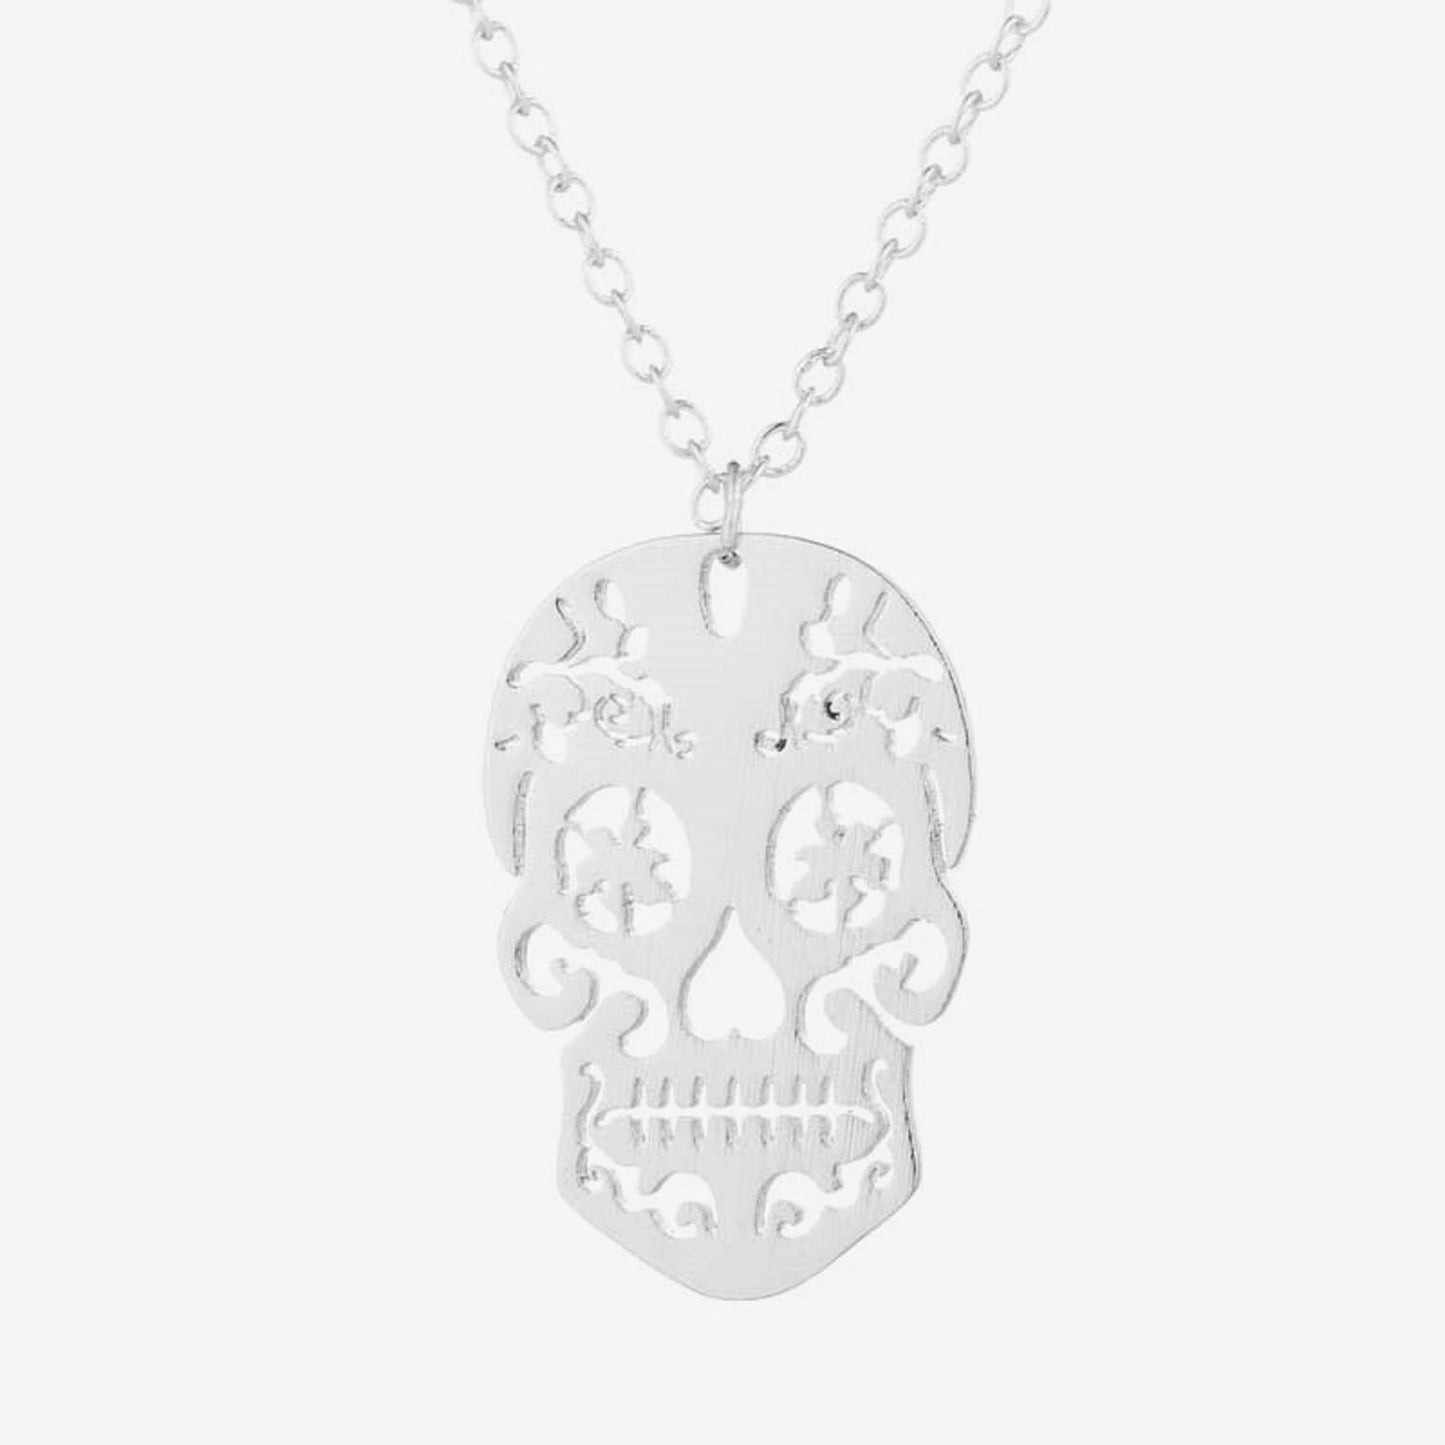 Silver Skull Pendant and Necklace, Women Skull Jewelry, Skull Pendant, Day of the Dead, Sugar Skull Pendant, Mexican Jewelry, Silver Skull